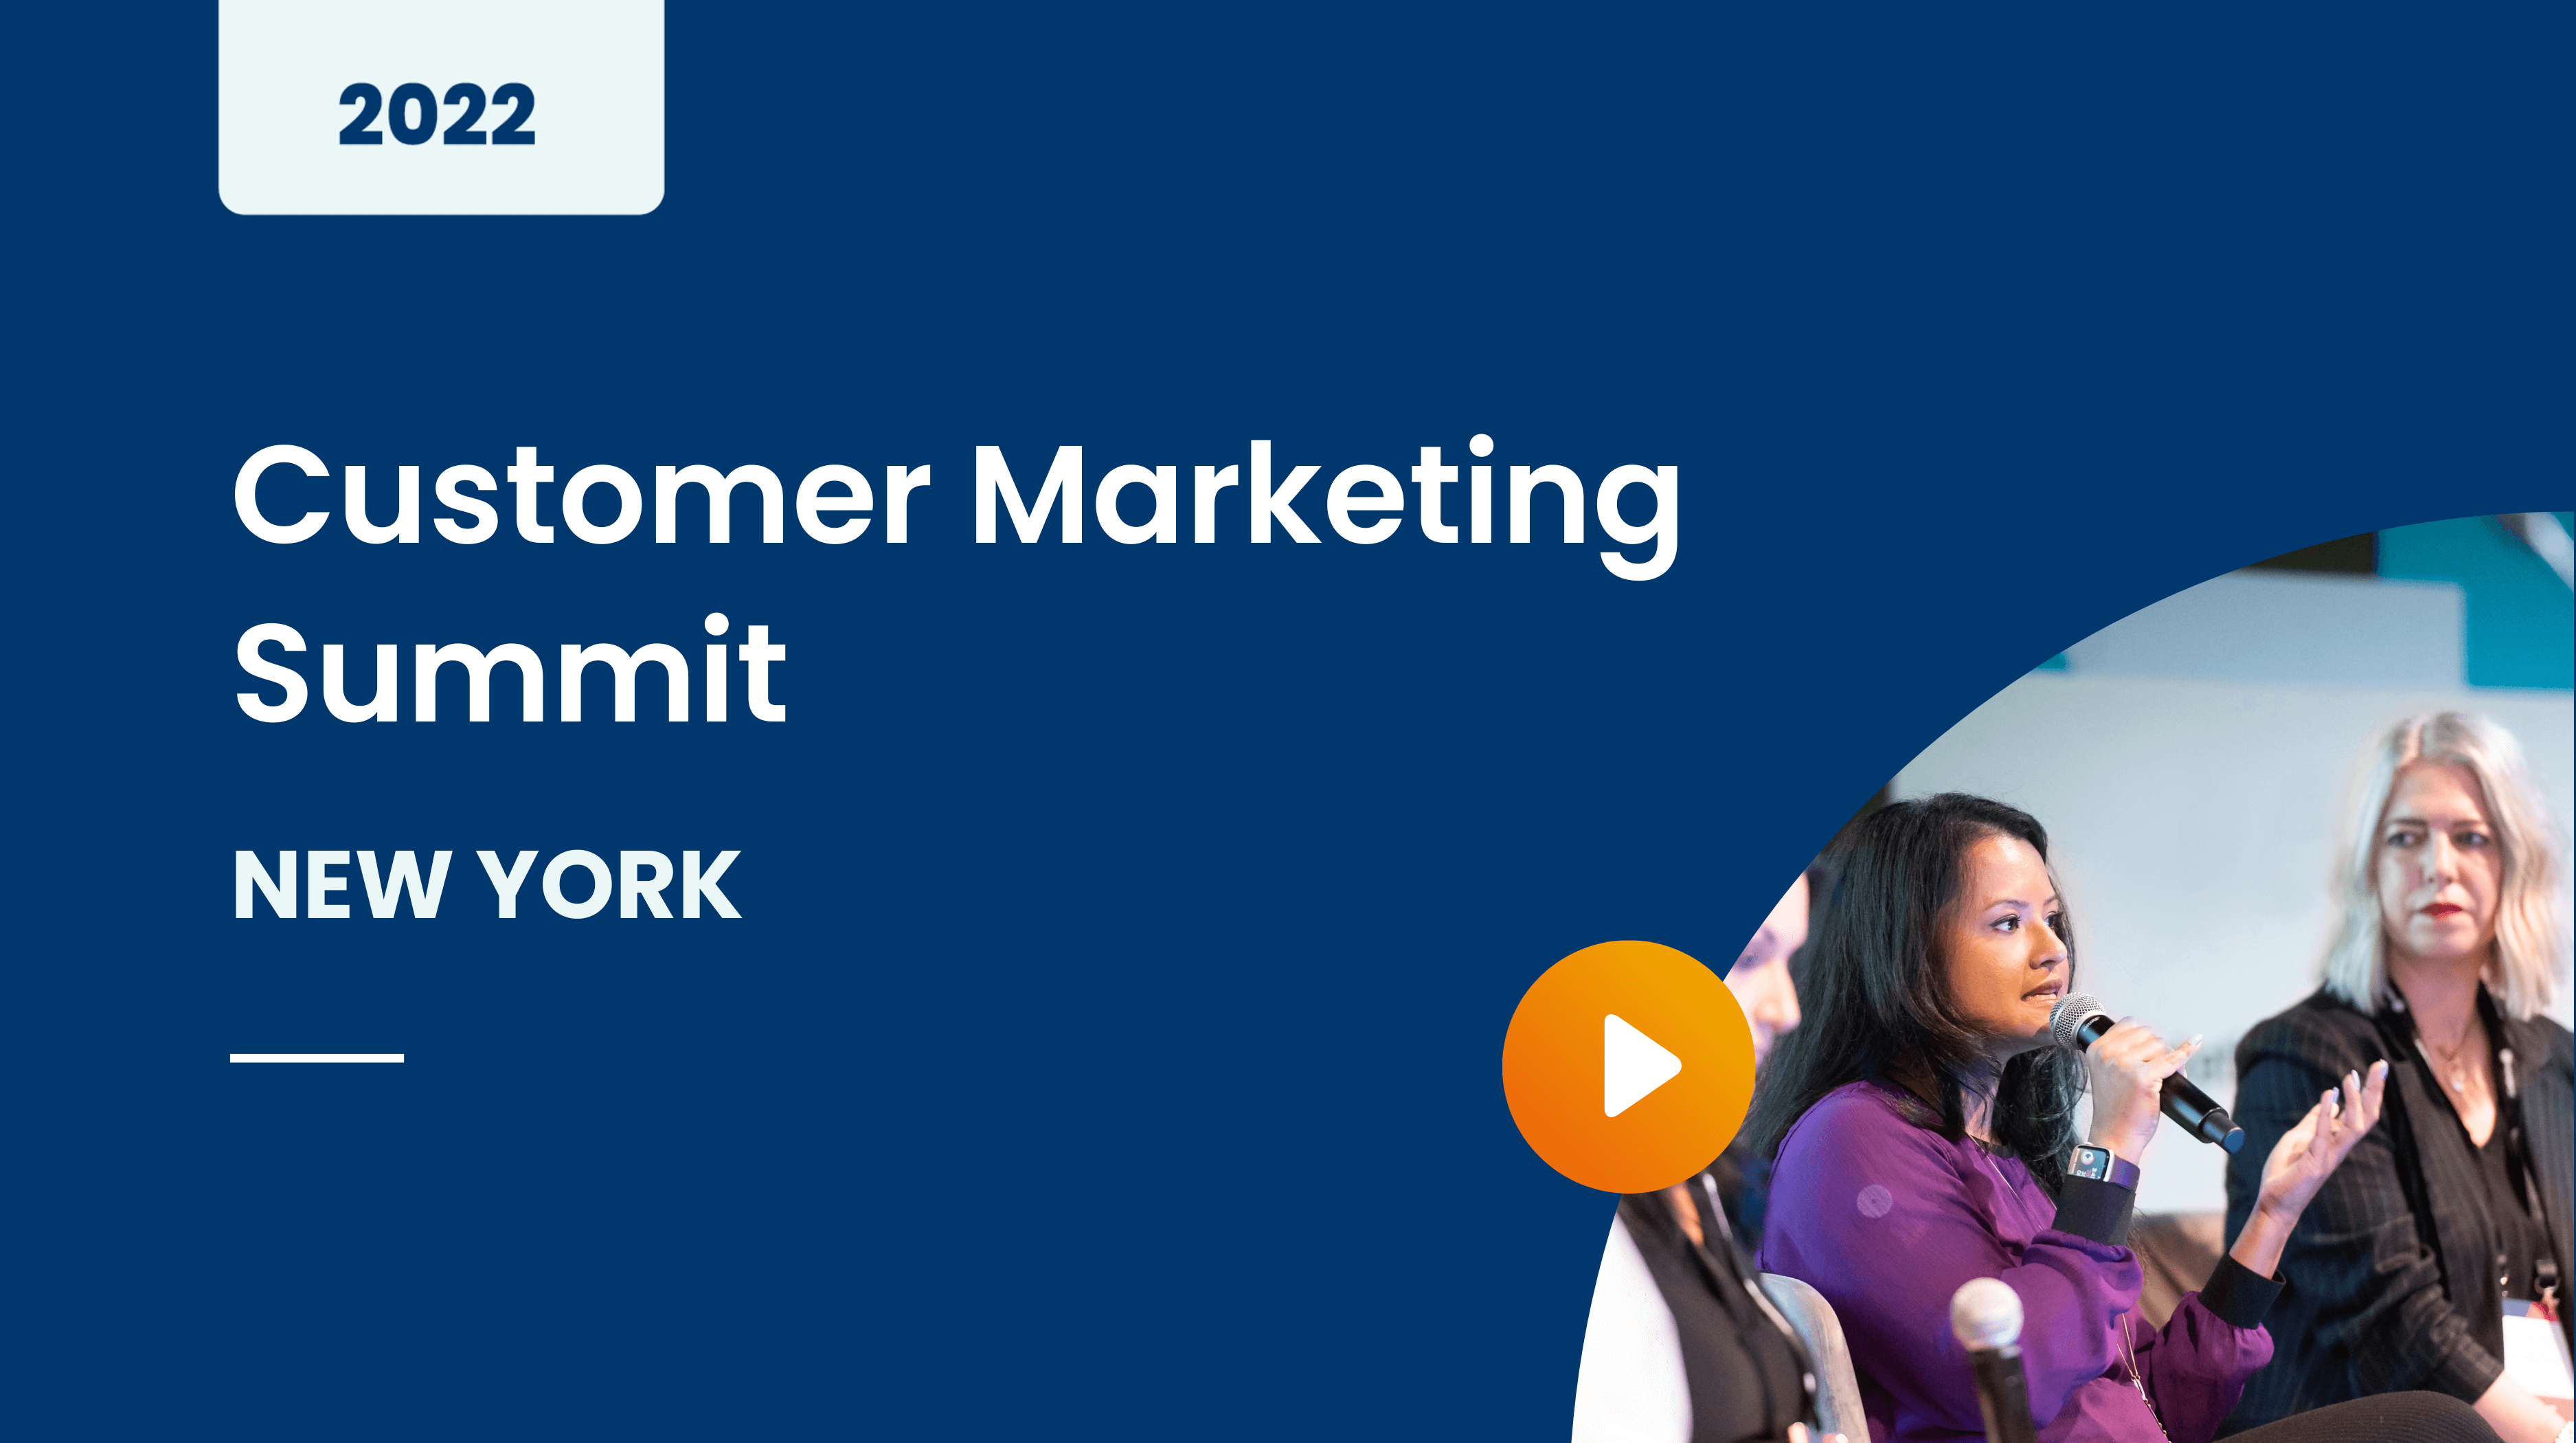 Customer Marketing Summit New York 2022